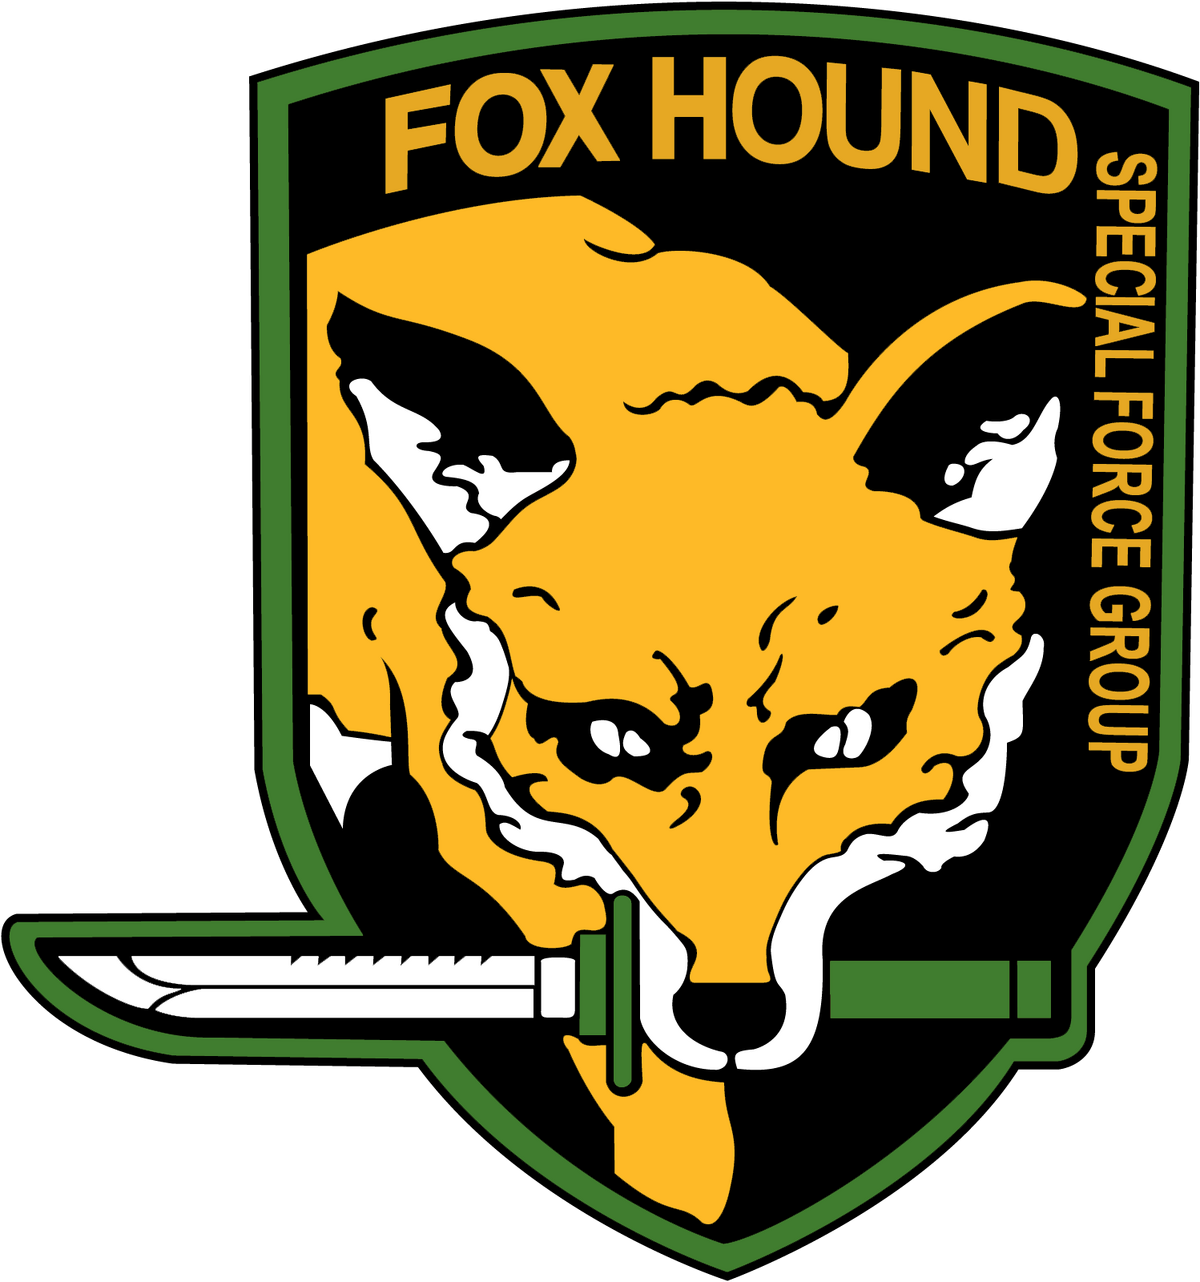 foxhound logo black and white